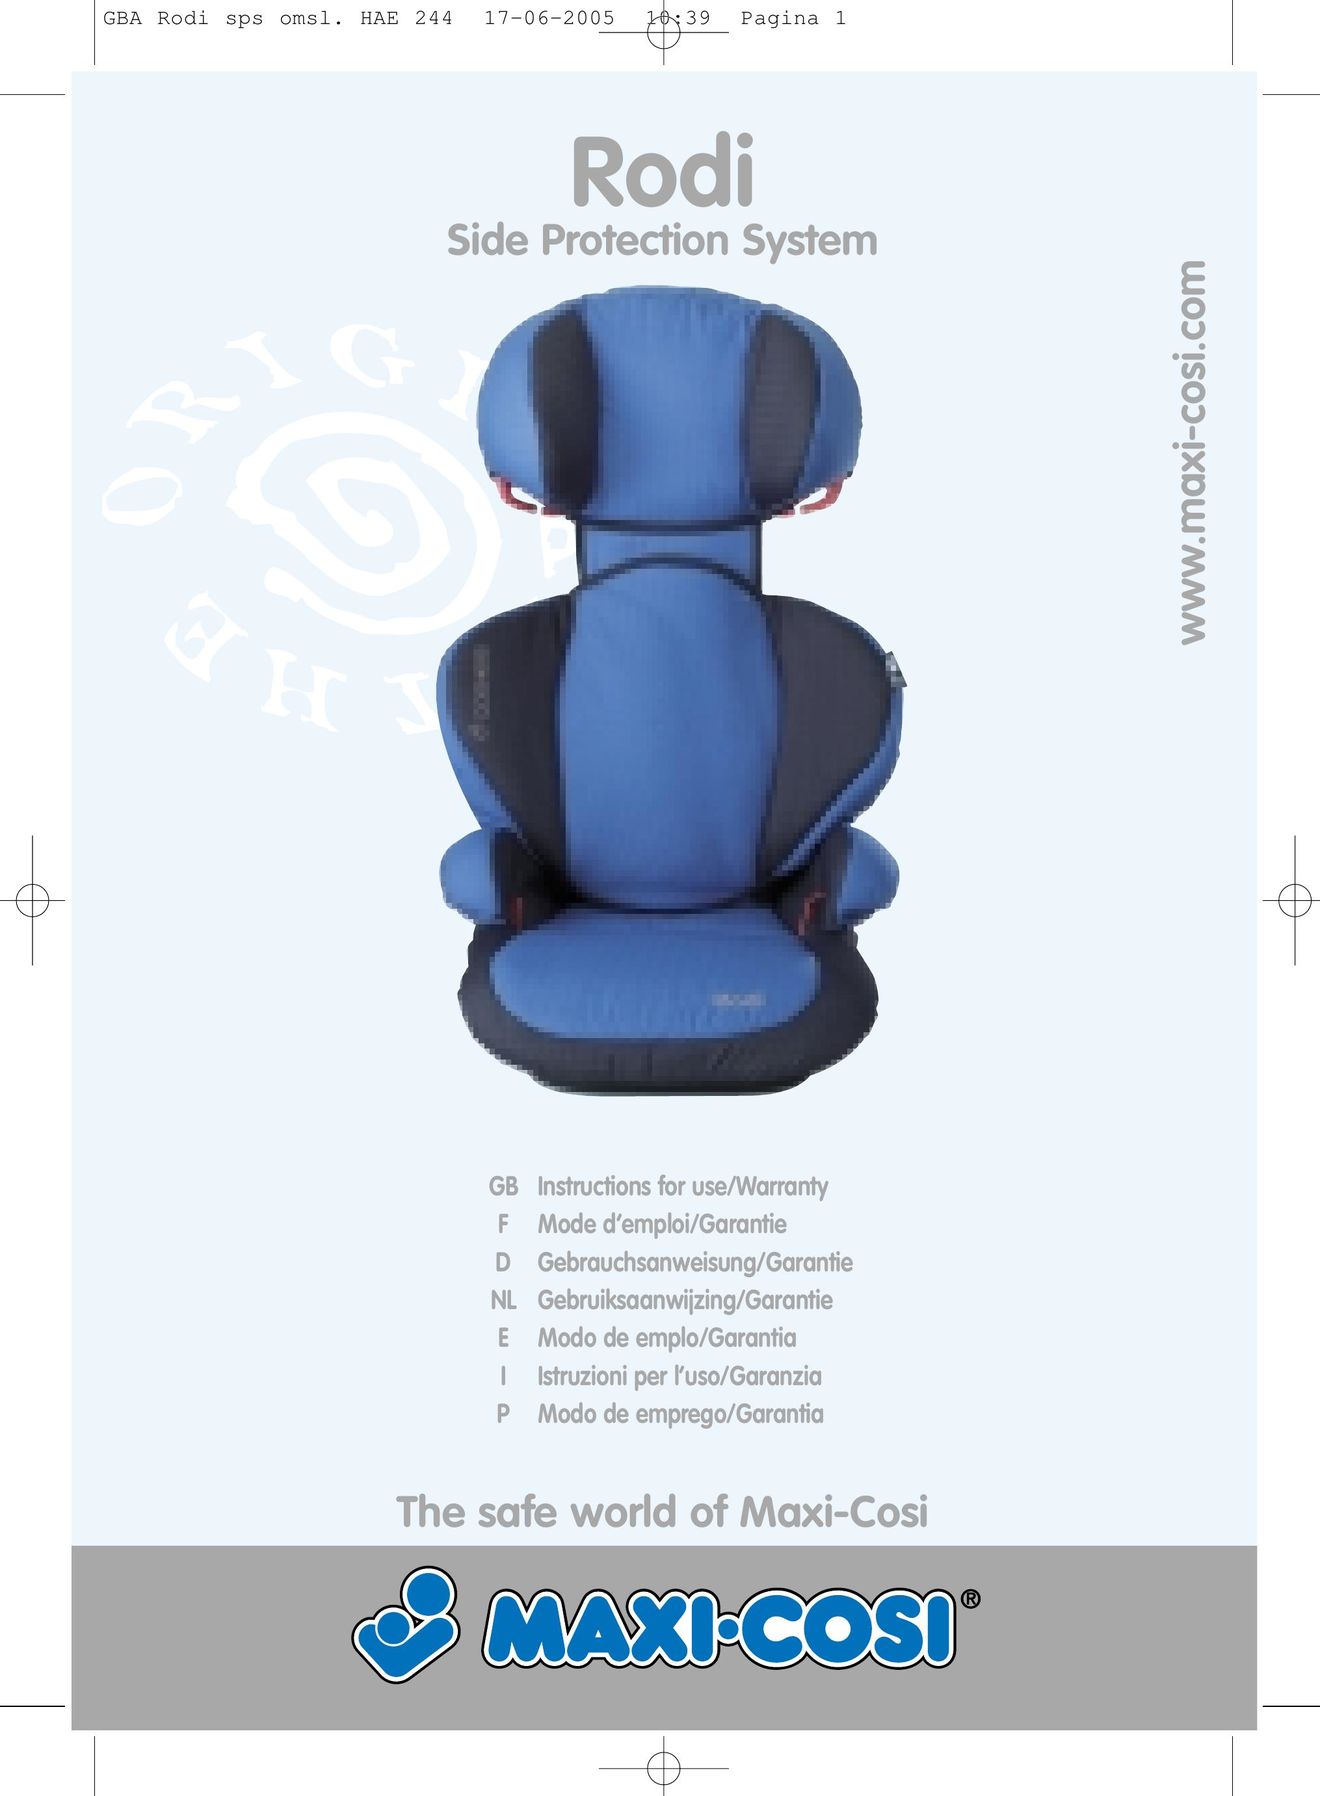 Maxi-Cosi safety seat Car Seat User Manual